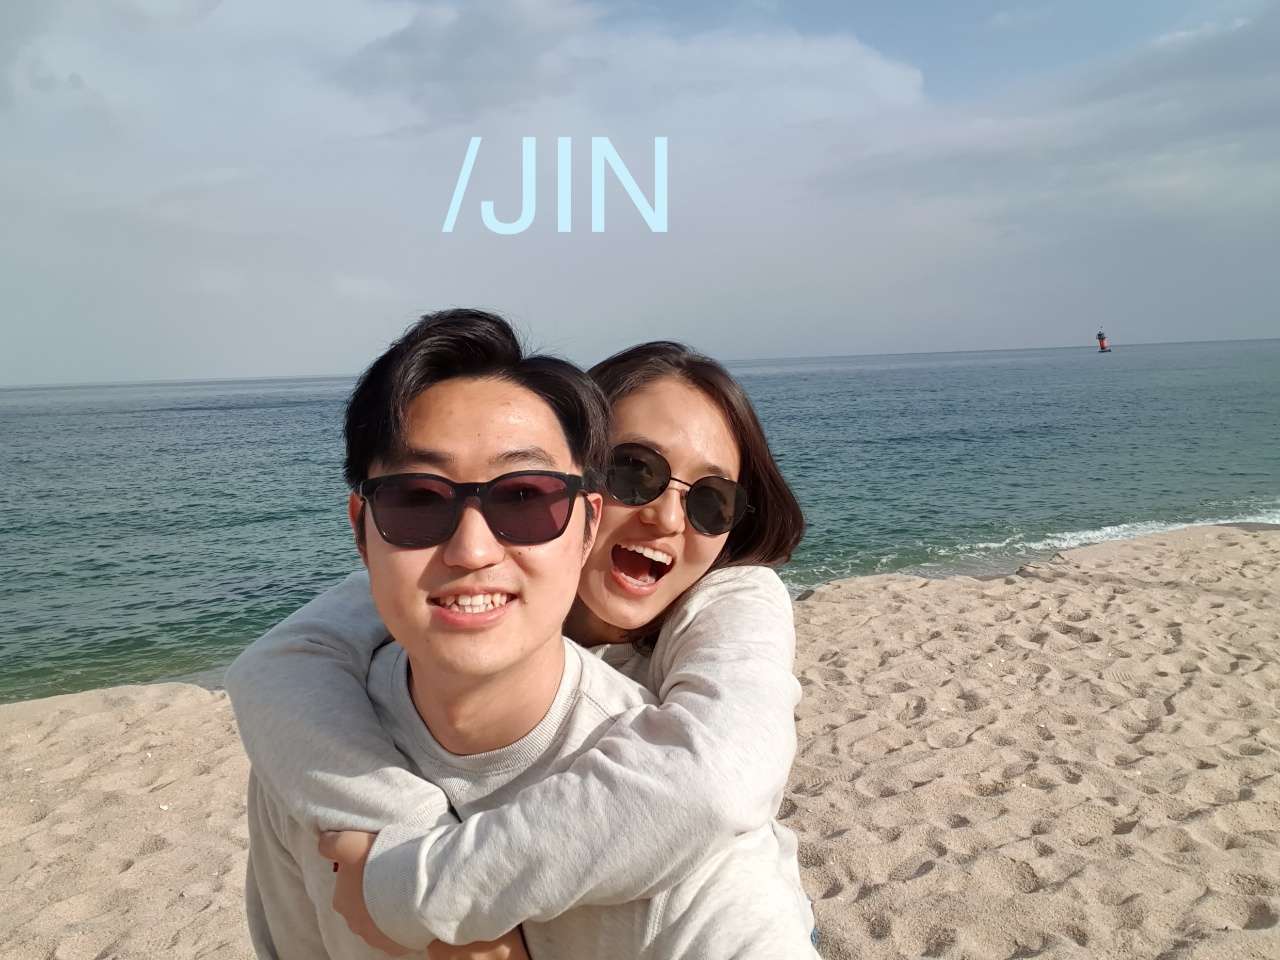 Jin na plaży? puzzle online ze zdjęcia